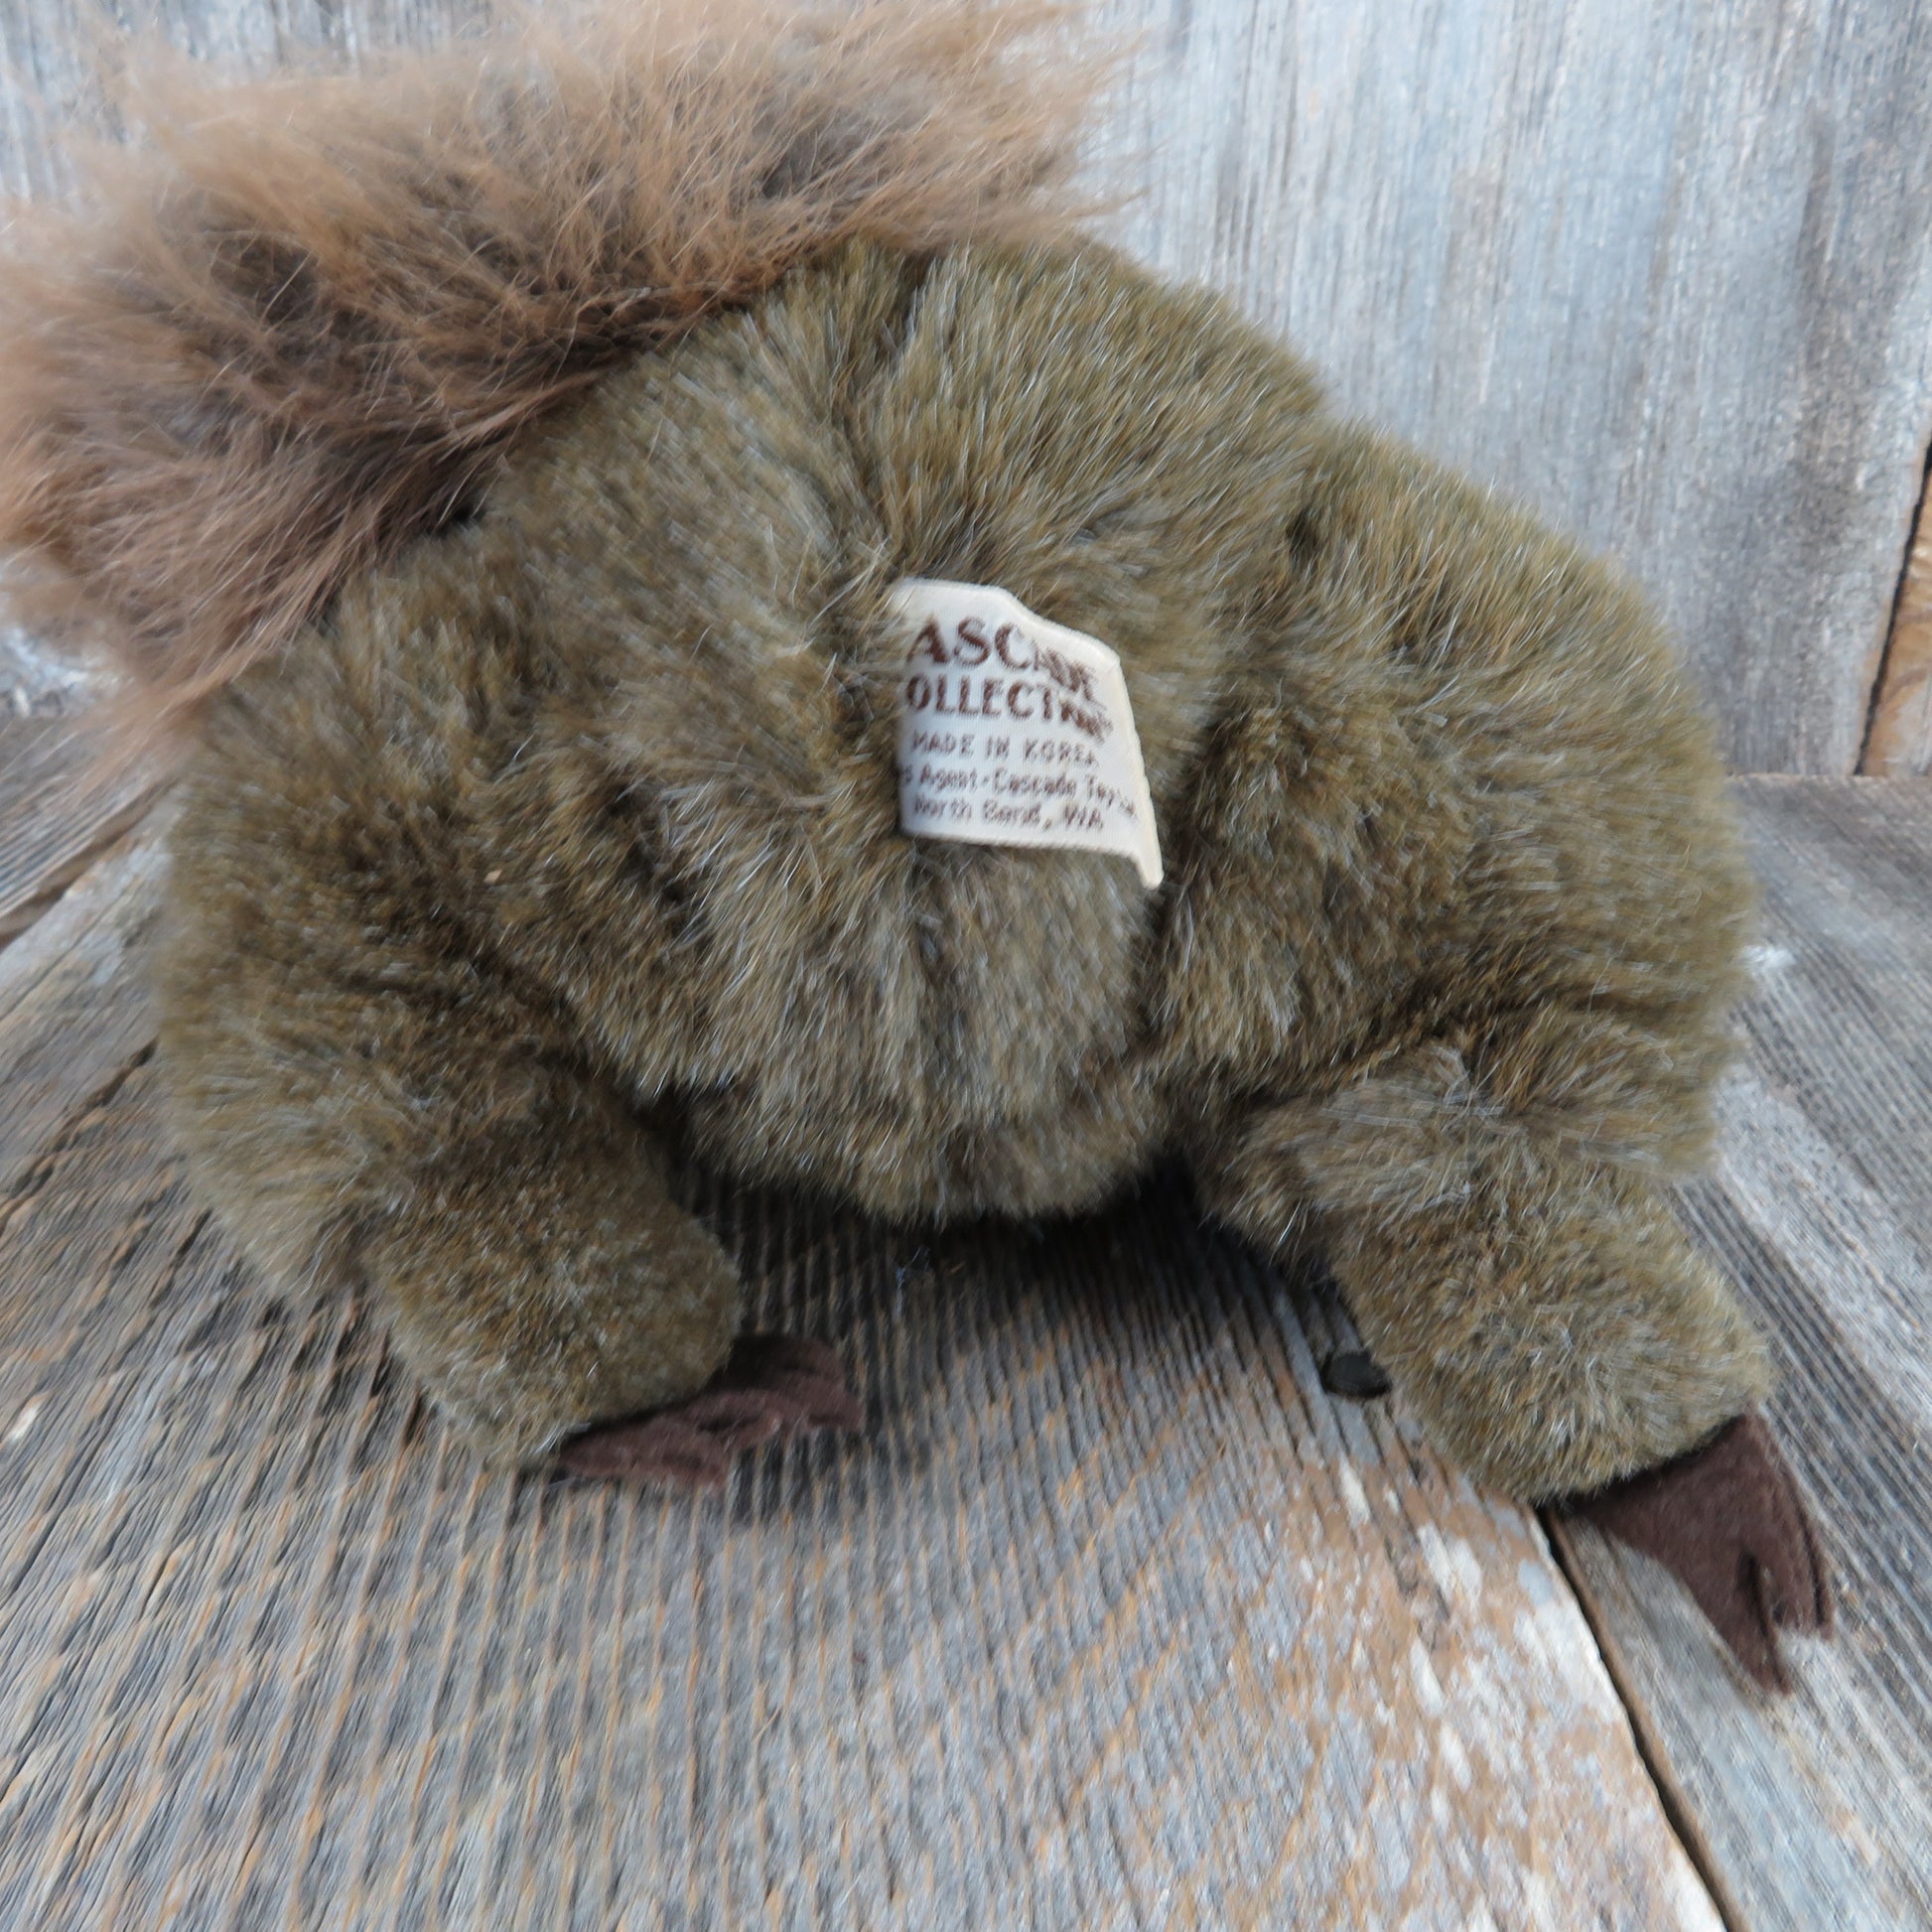 Vintage Chipmunk Stuffed Animal Brown Cascade Collection Plush Squirrel Korea Realistic - At Grandma's Table